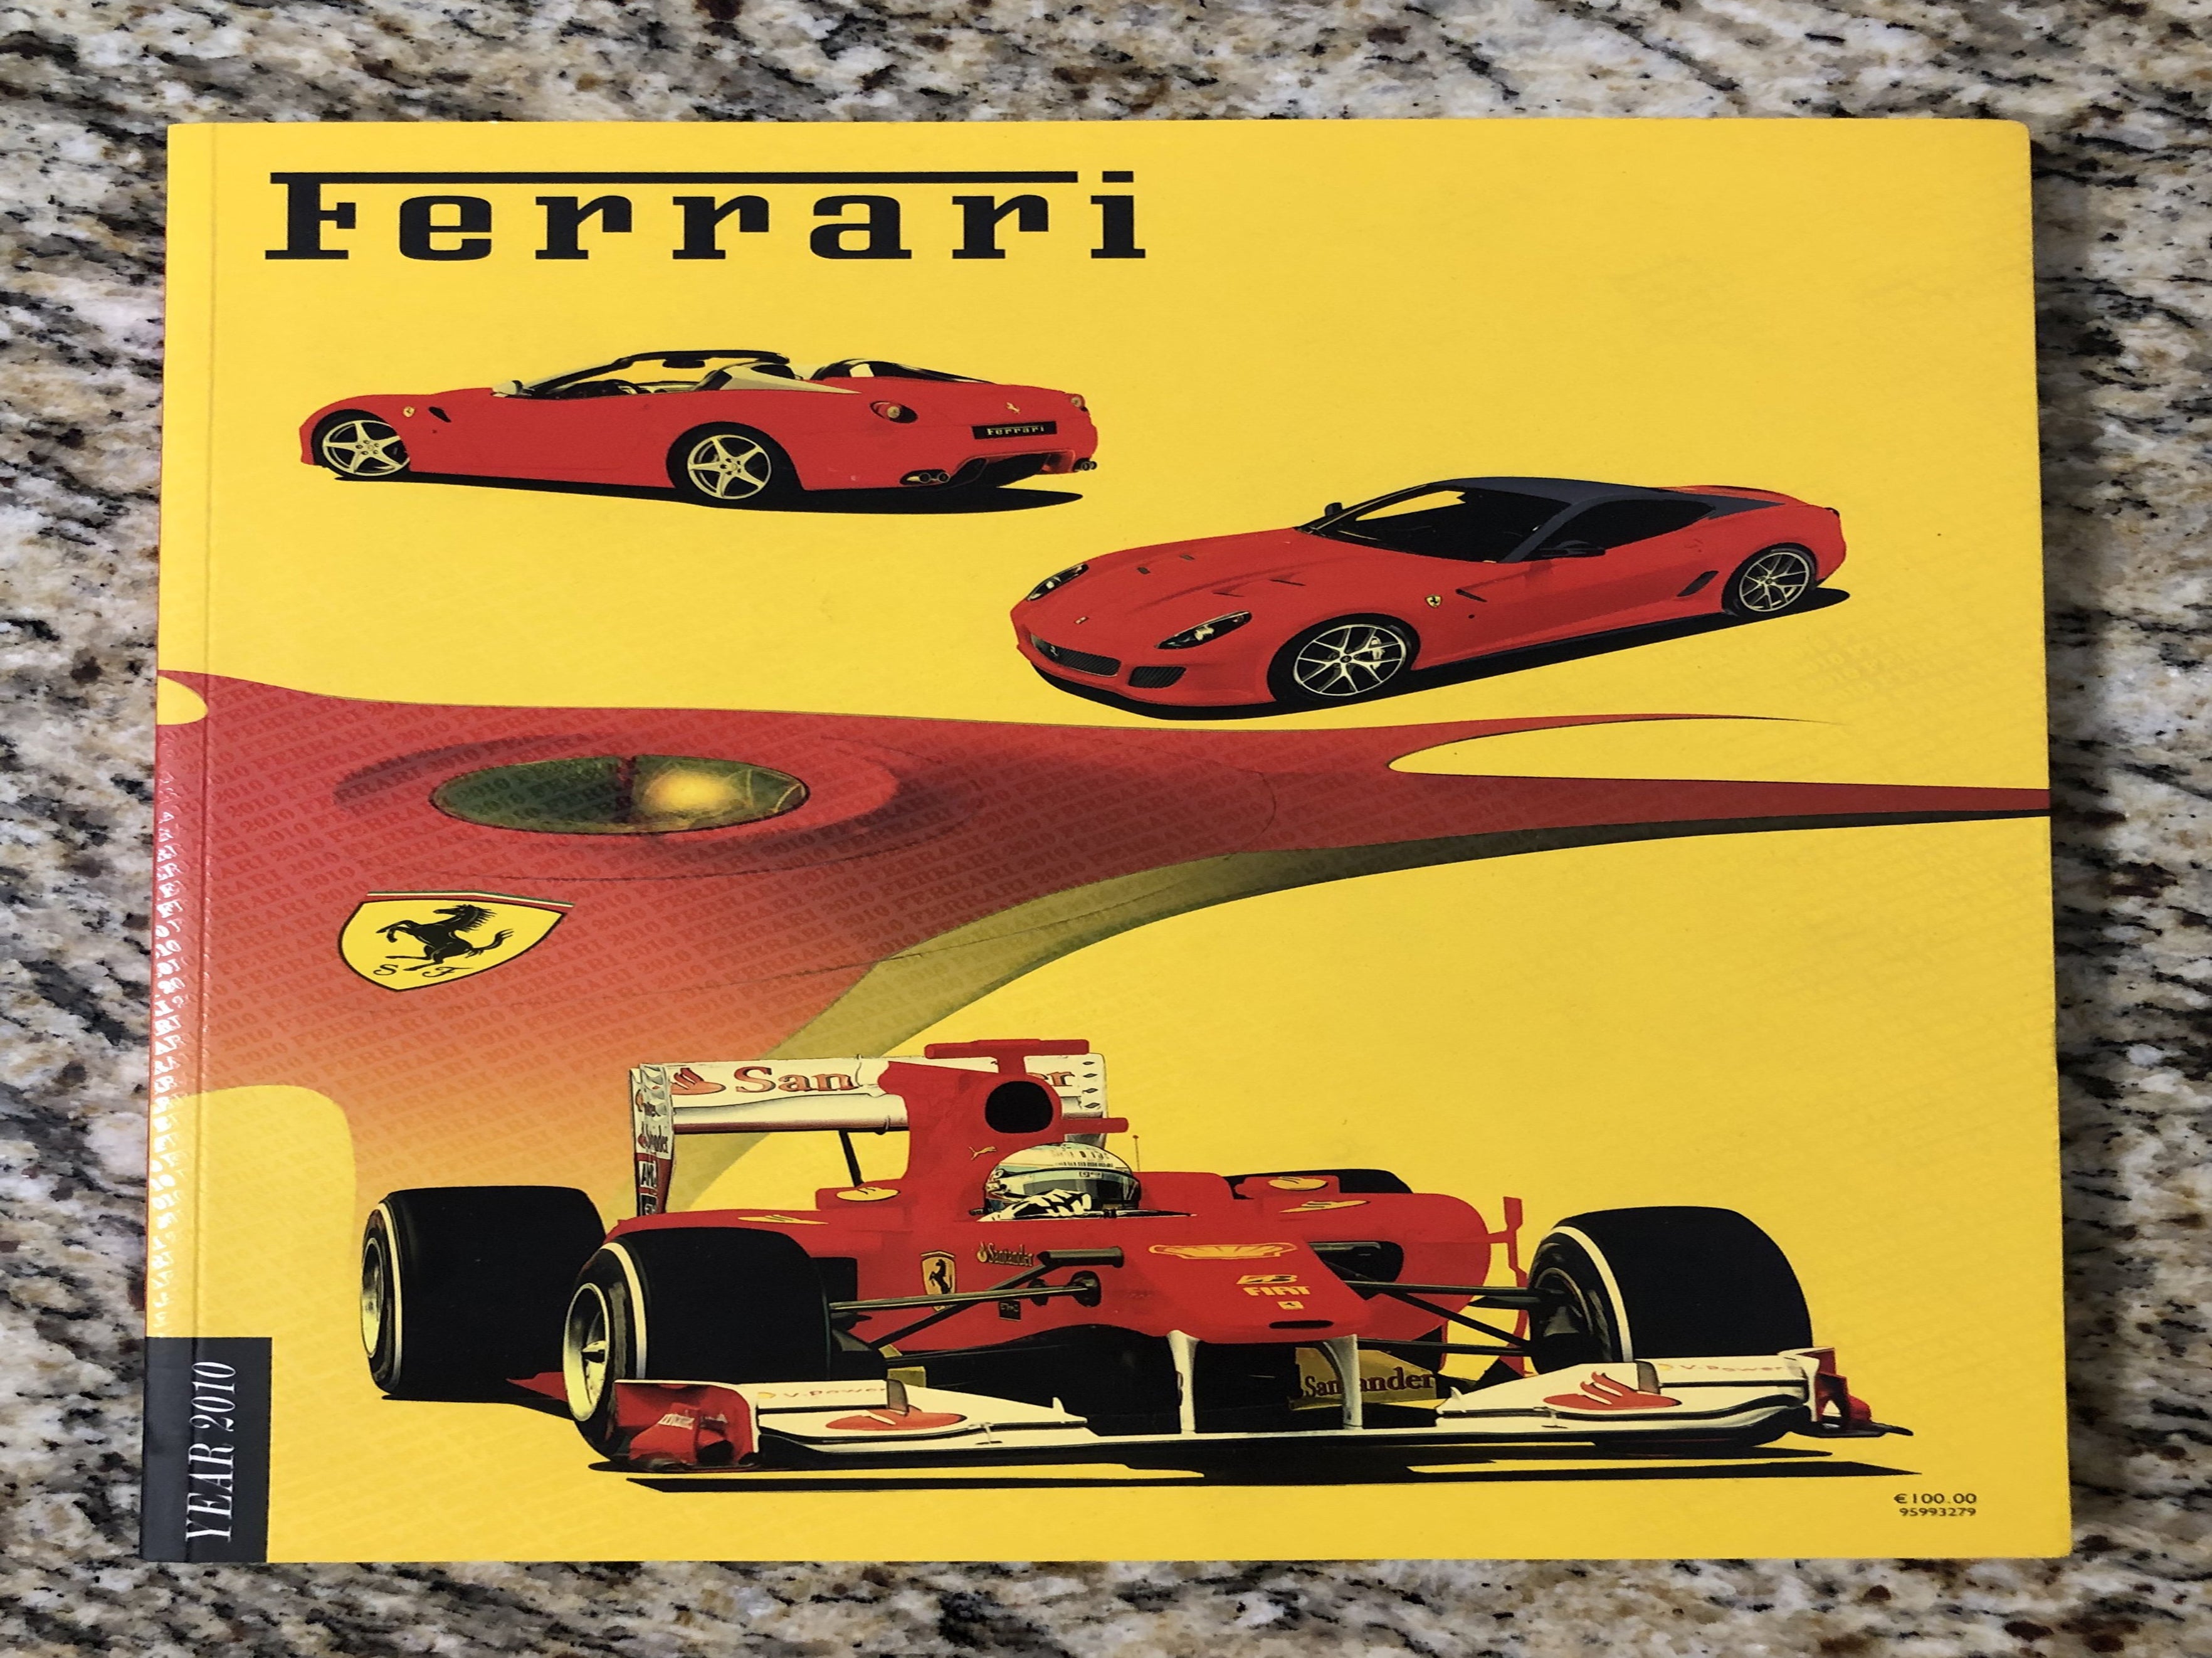 2010 Ferrari Yearbook